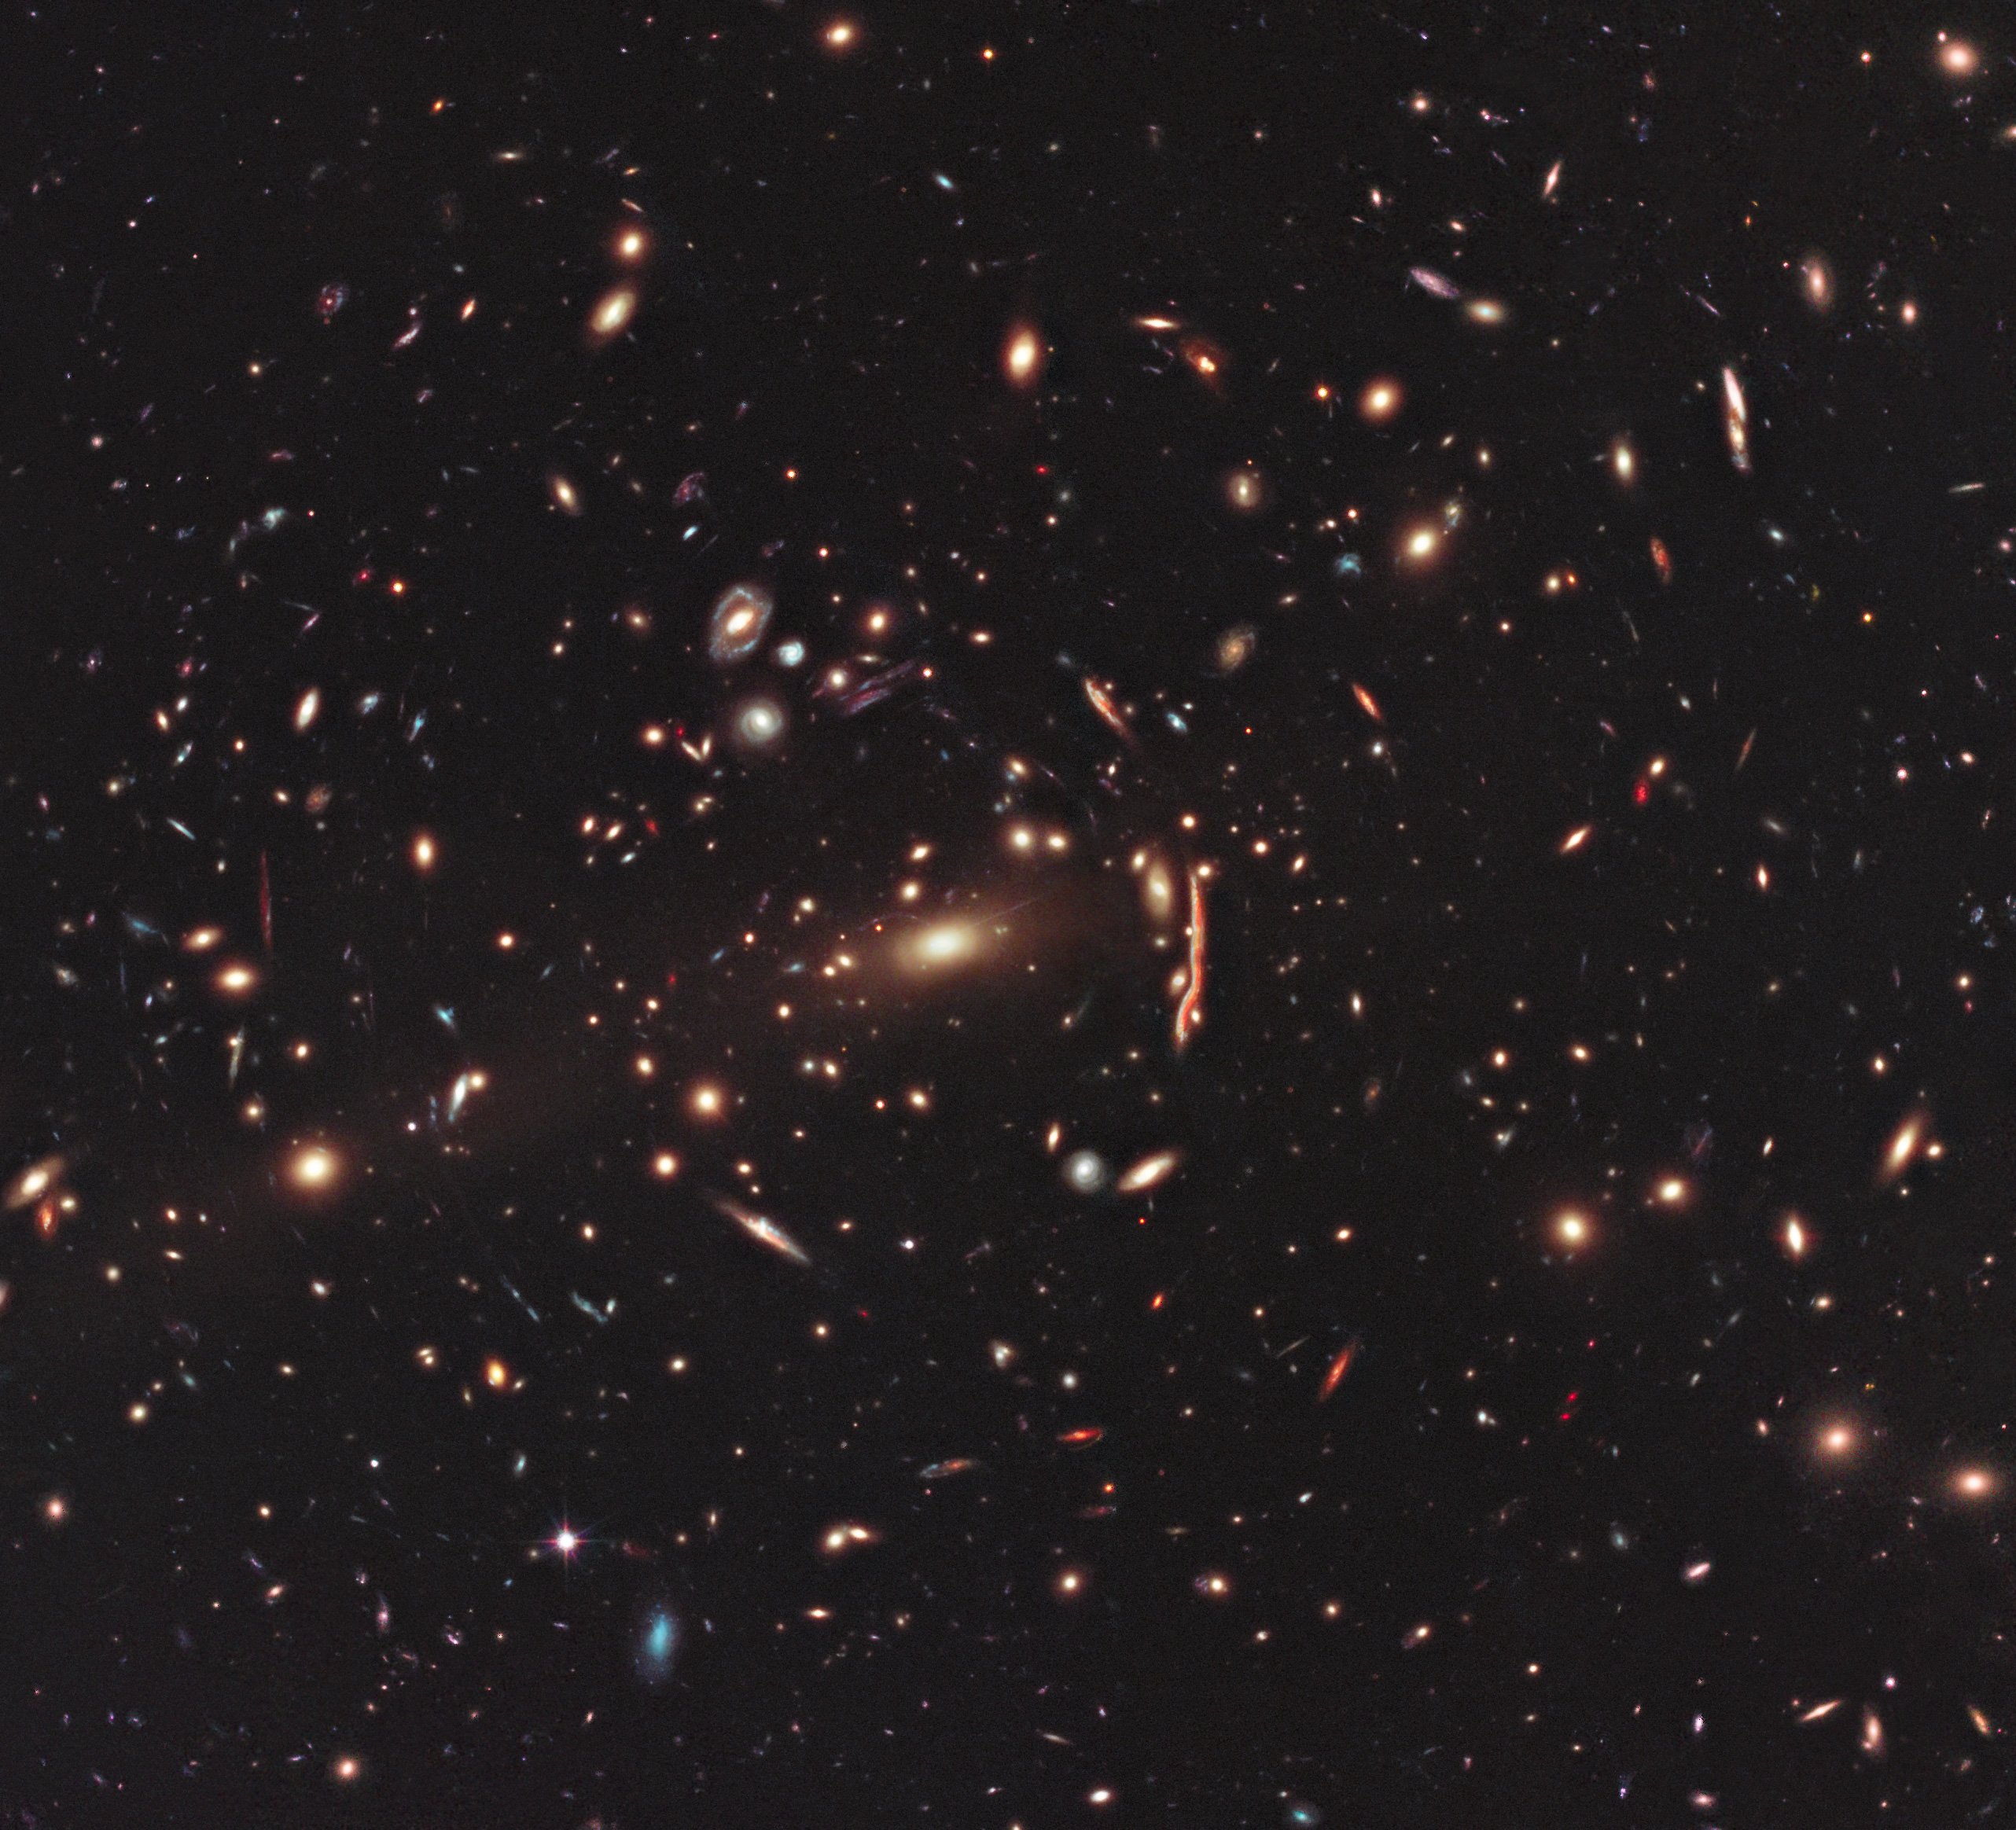 Jean-Baptiste Faure: Hubble image of Galaxy Cluster MACS J1206.2-0847